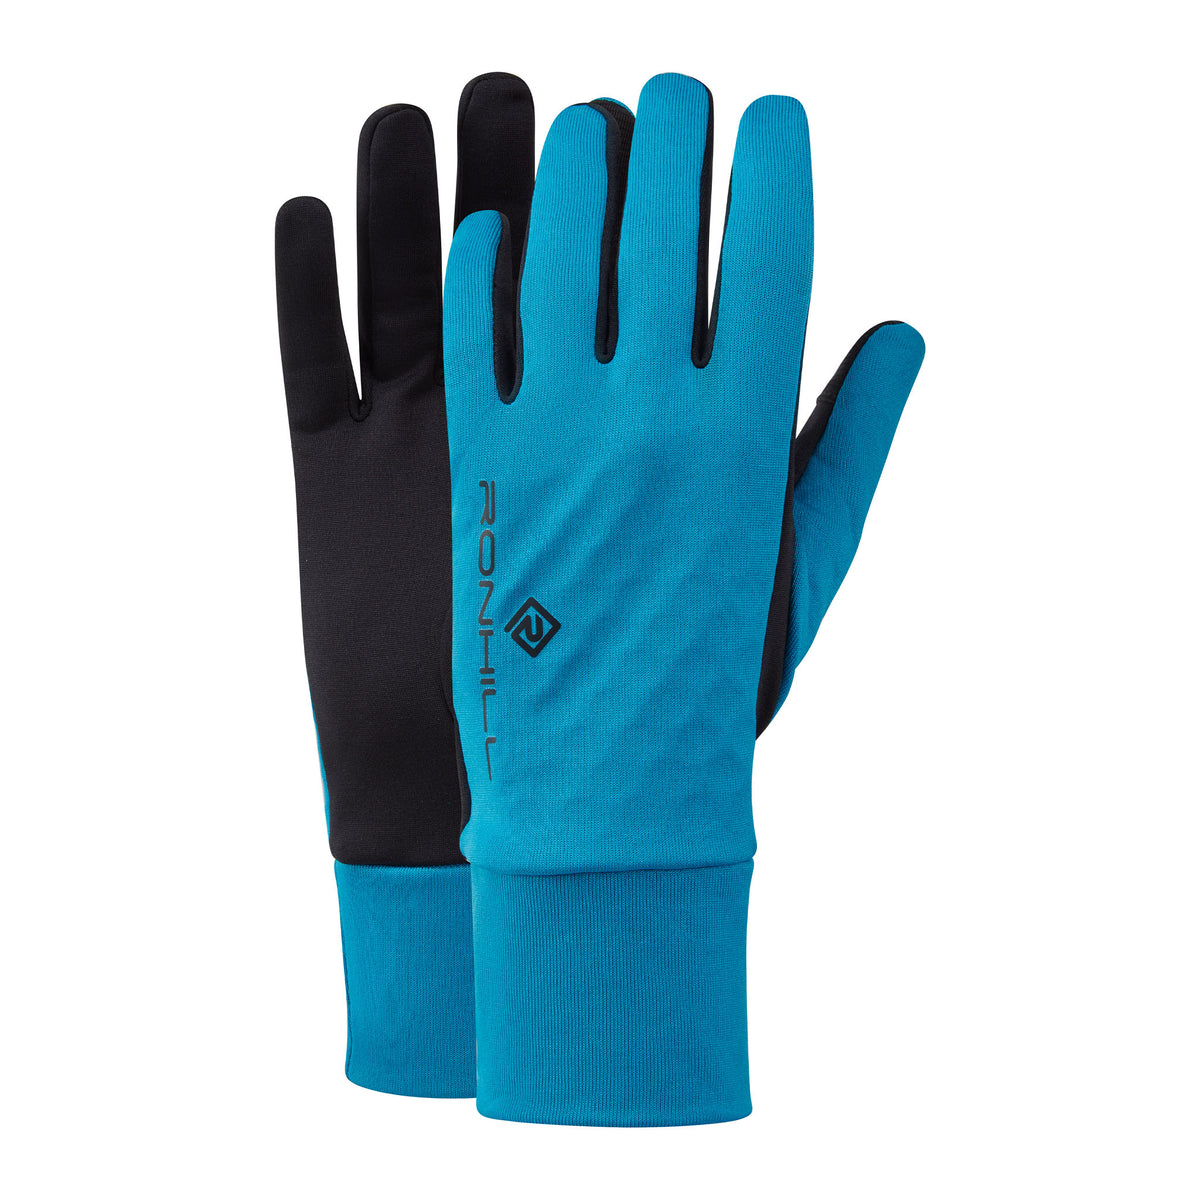 Ronhill Prism Glove: Kingfisher/Black